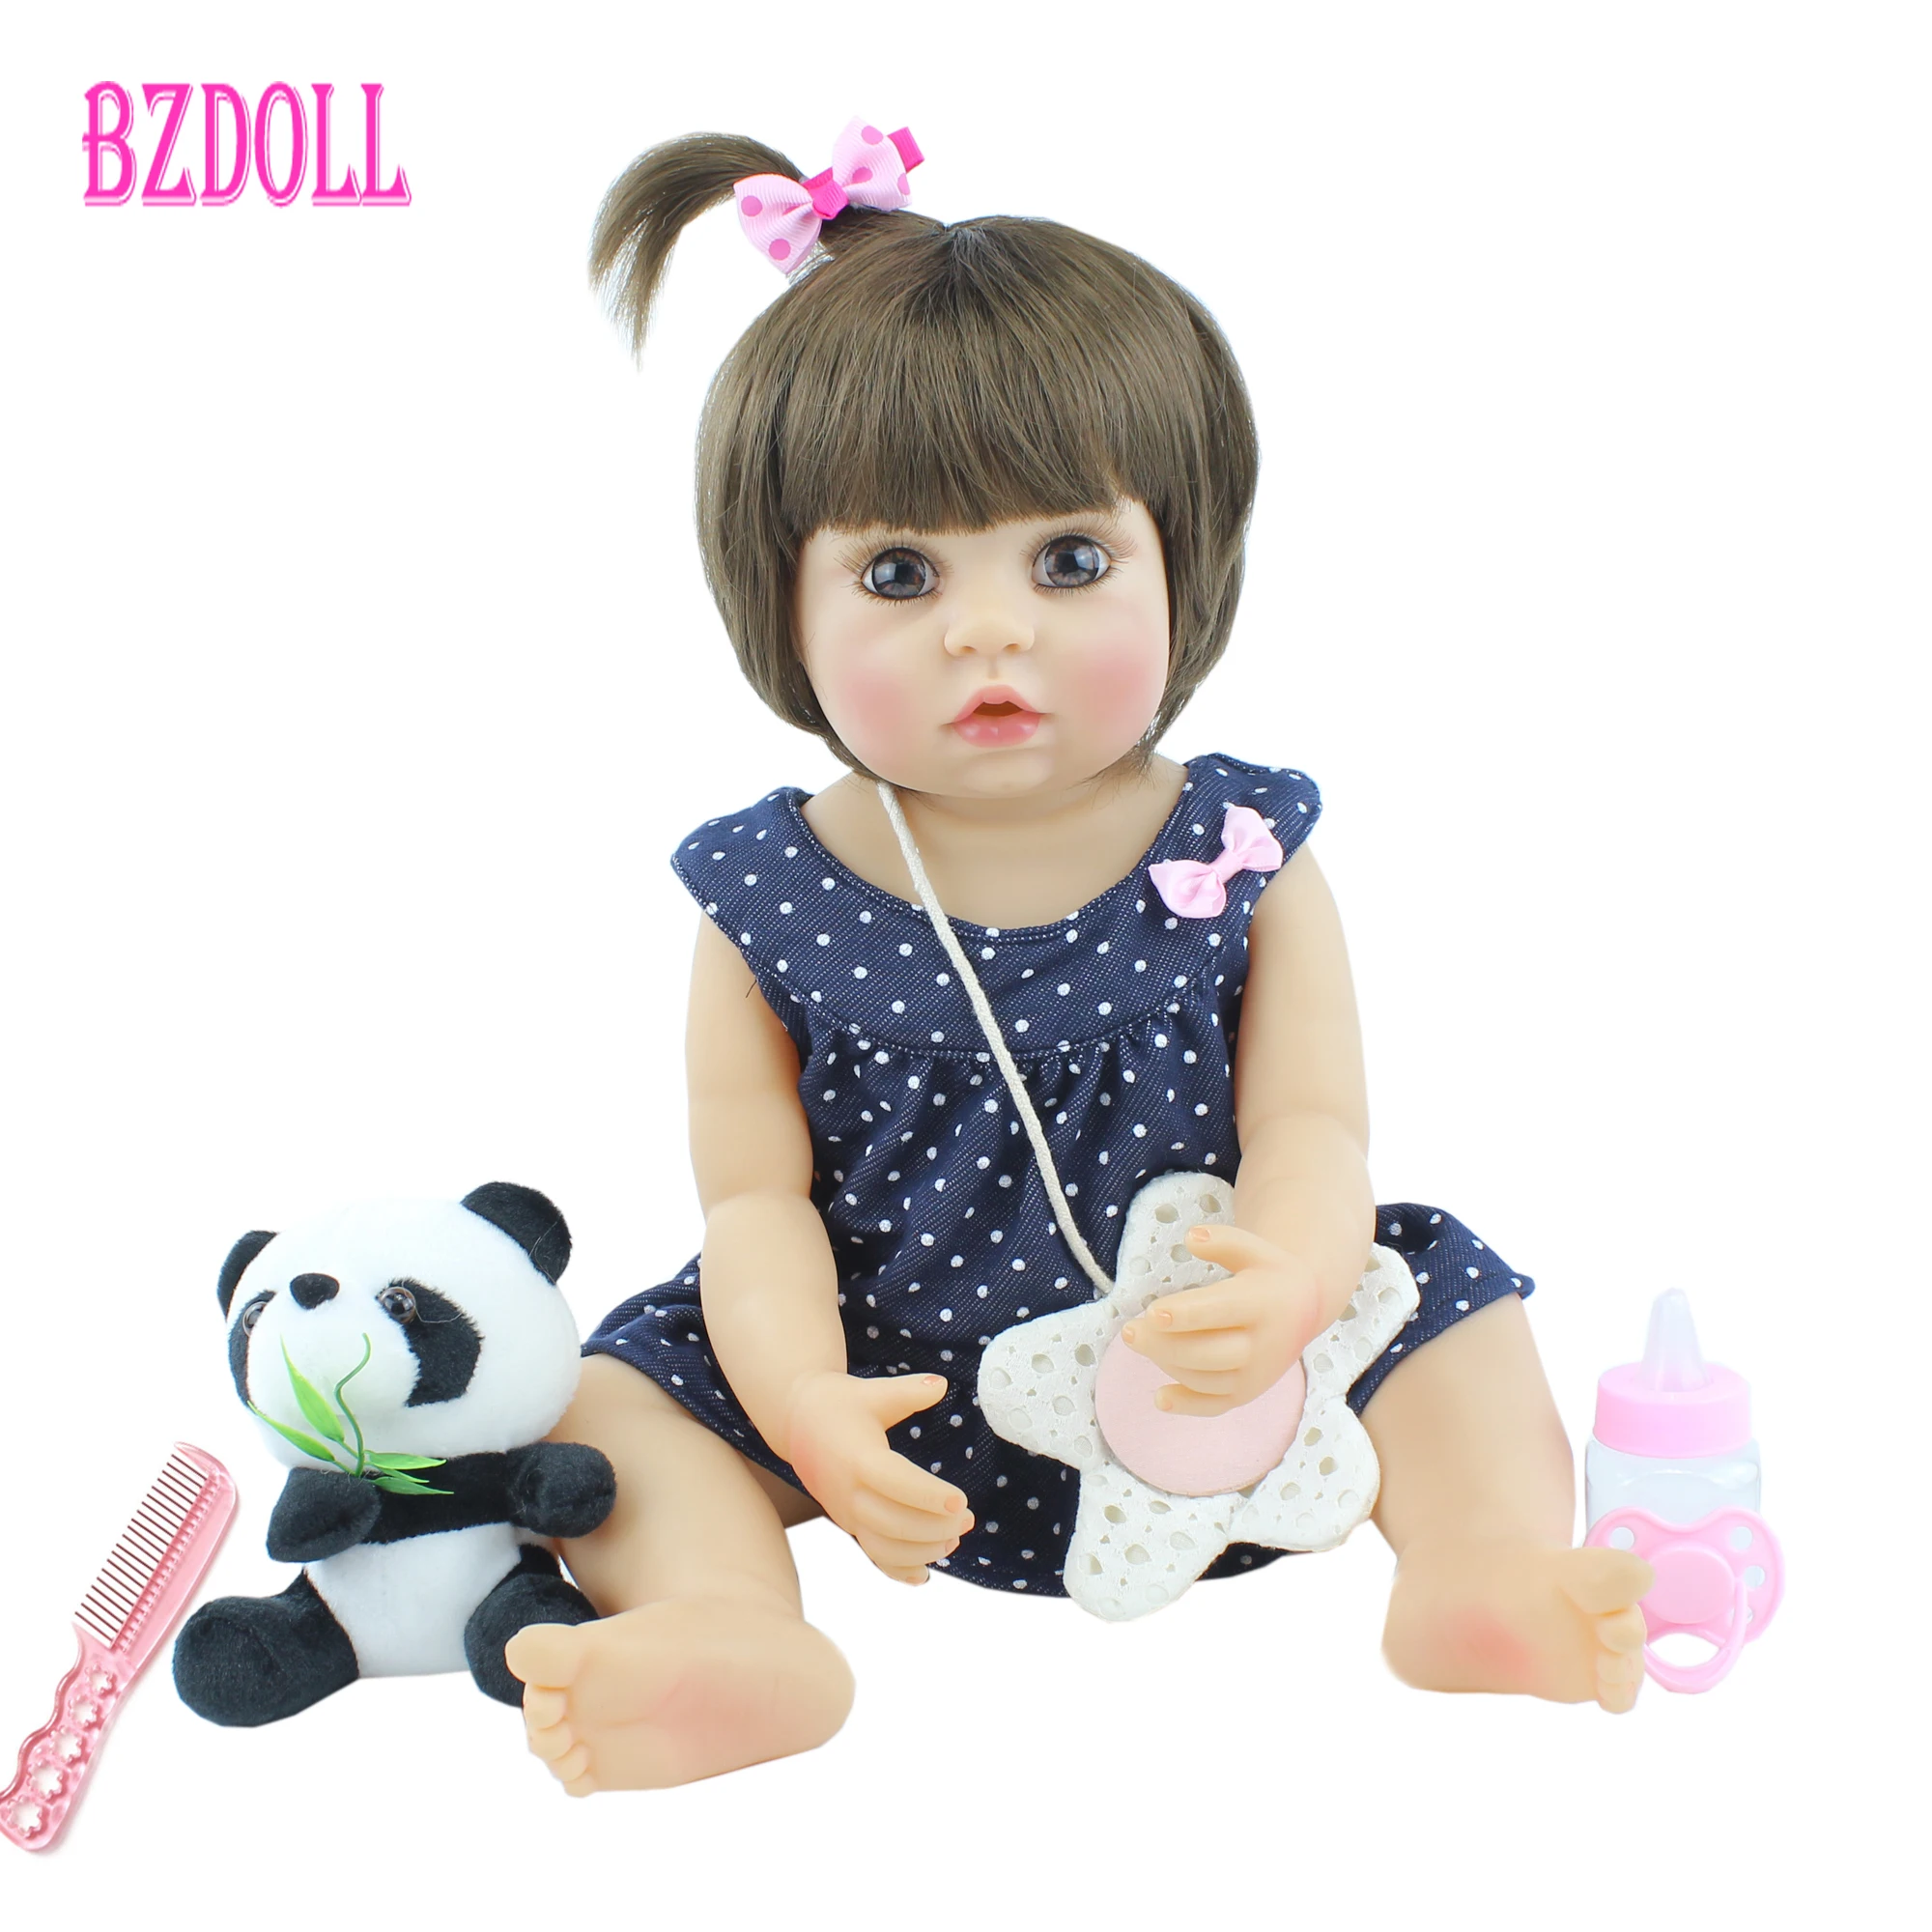 

55CM Full Soft Silicone Baby Reborn Doll Toy For Girls Lifelike Newborn Dress Up Princess Toddler Alive Babies Child Bebe Boneca